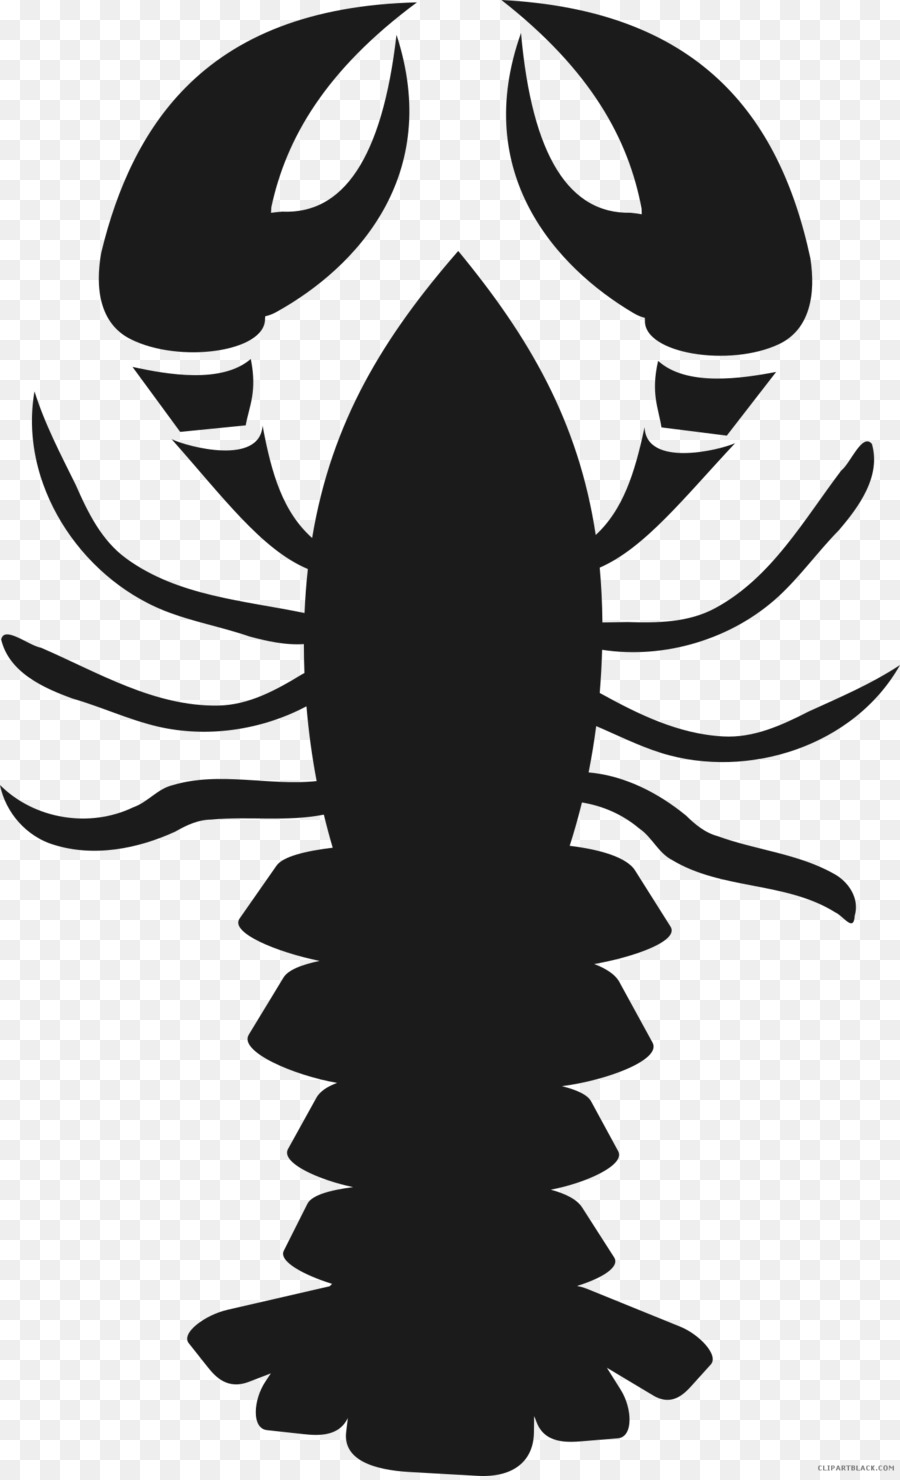 Lobster Clip Art Christmas Vector graphics Image - lobster png download - 1463*2400 - Free Transparent Lobster png Download.